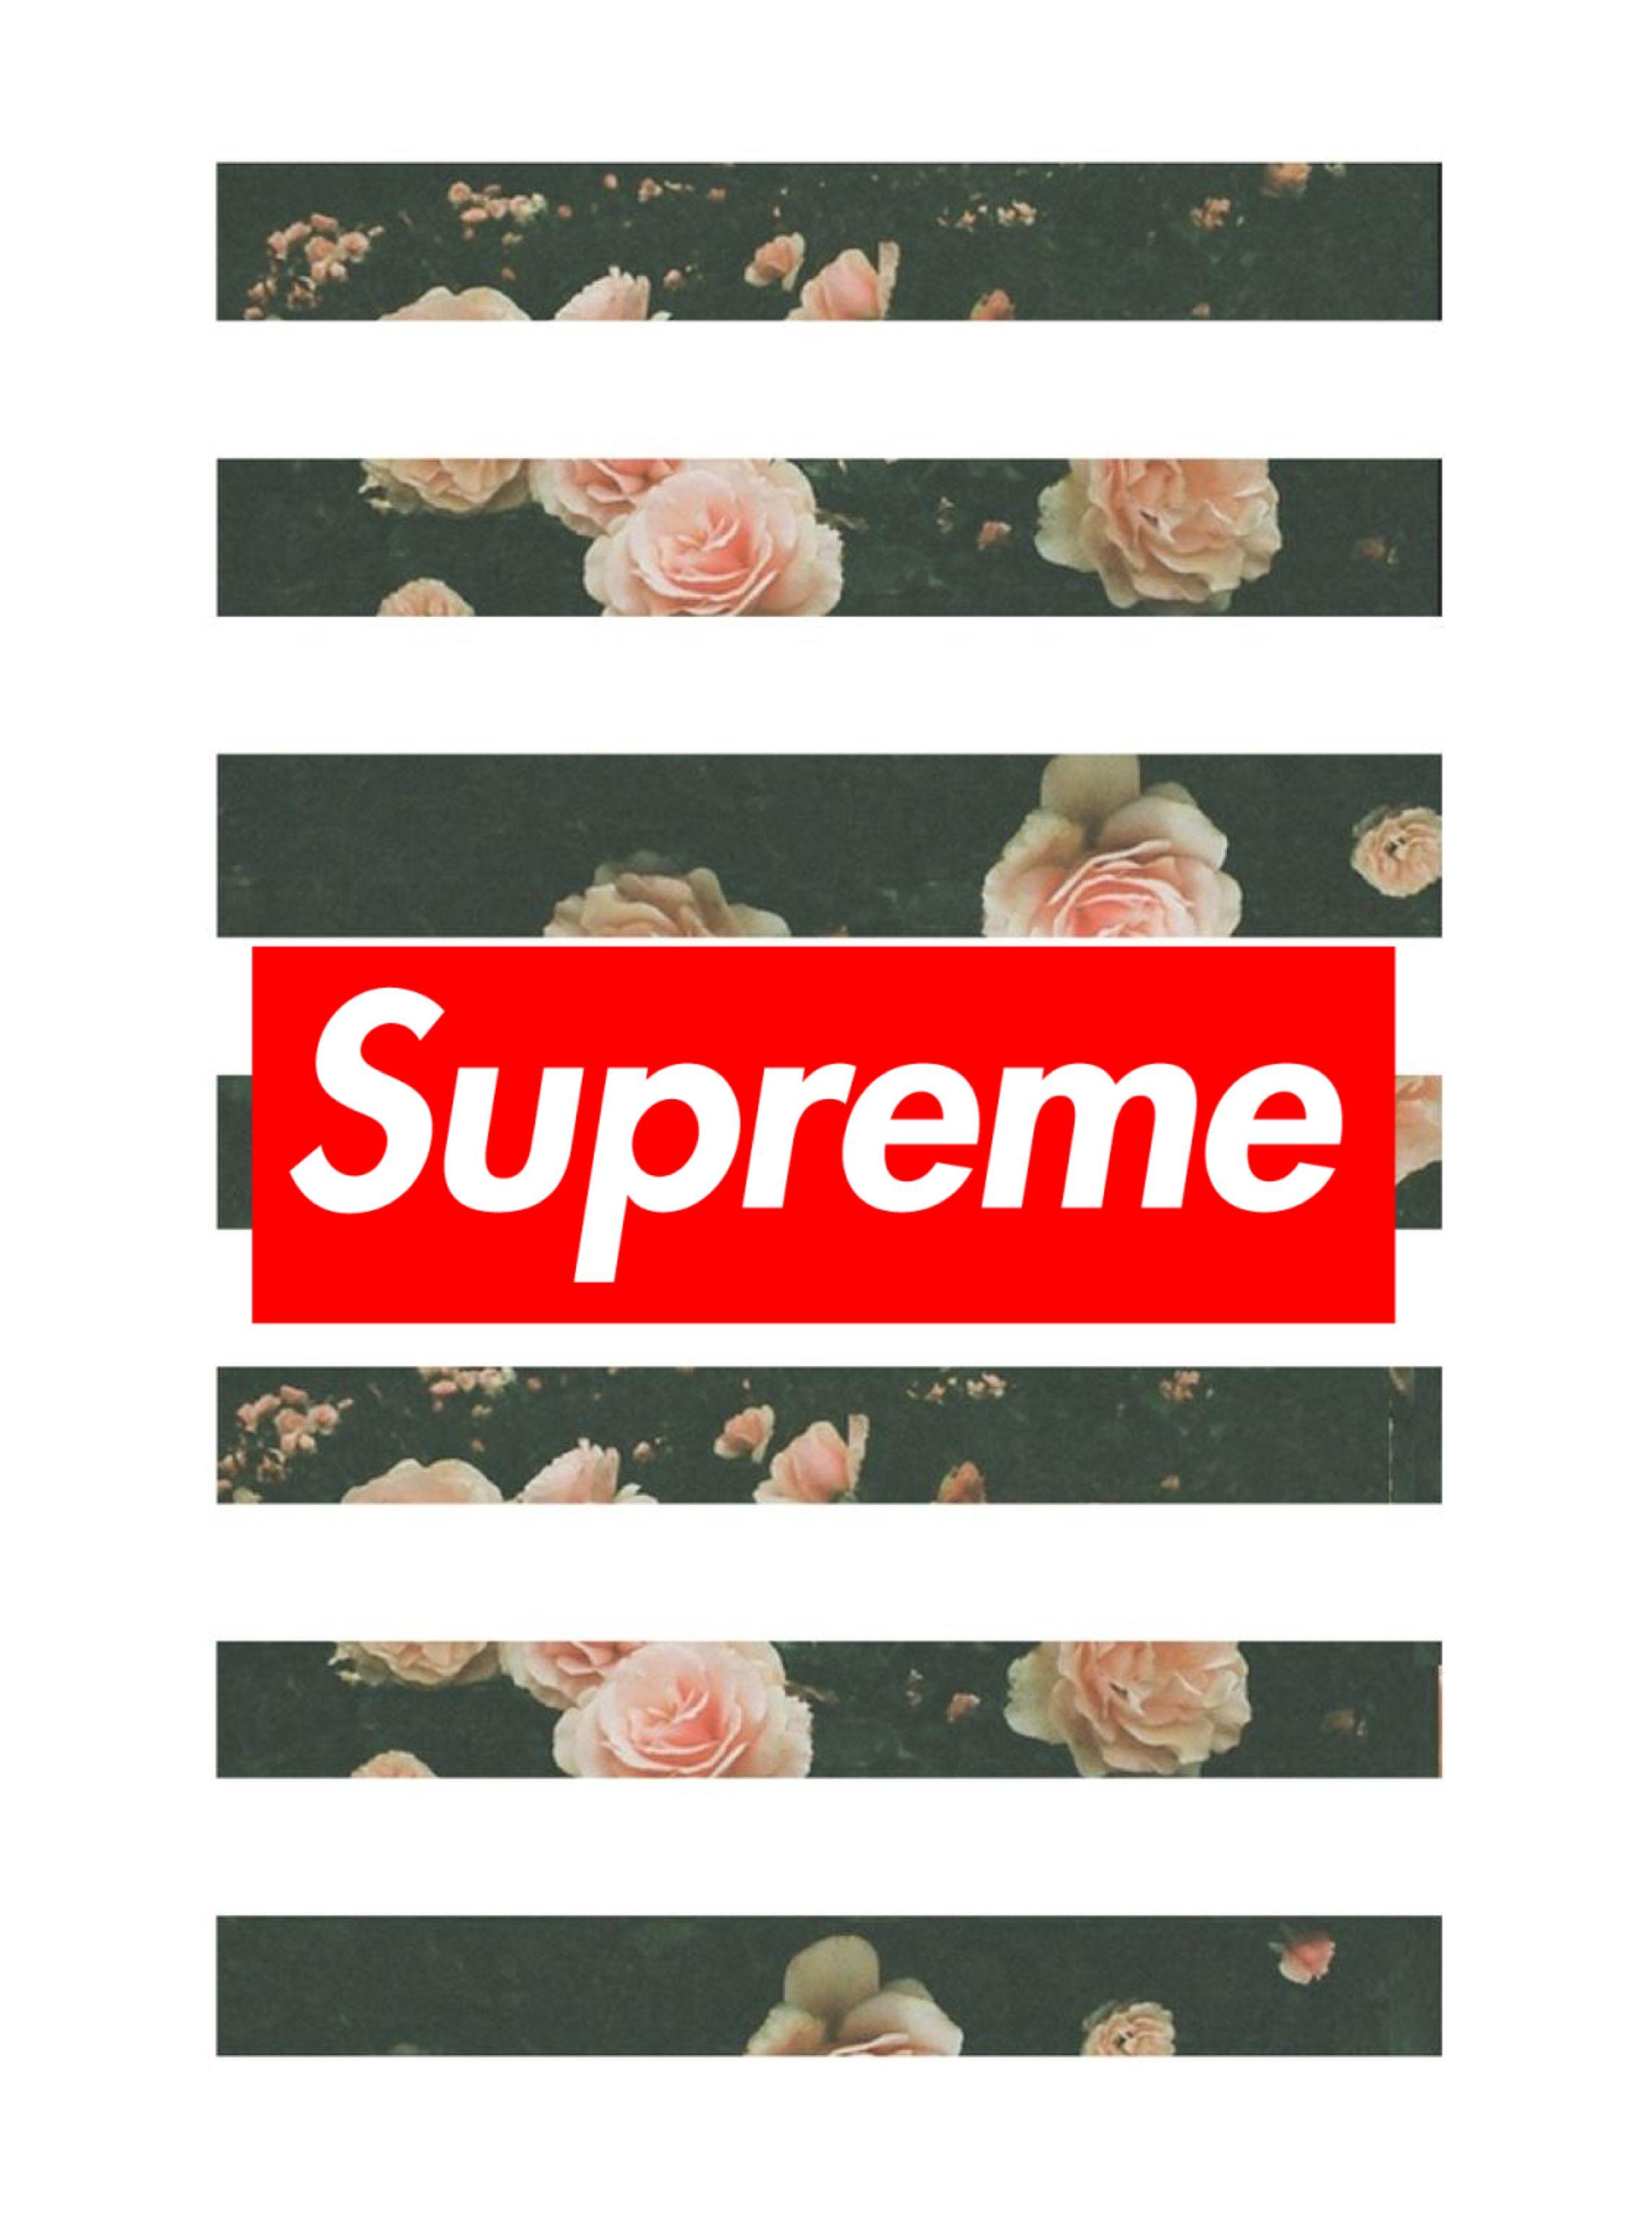 Supreme wallpaper. Supreme wallpaper, iPhone background, iPhone